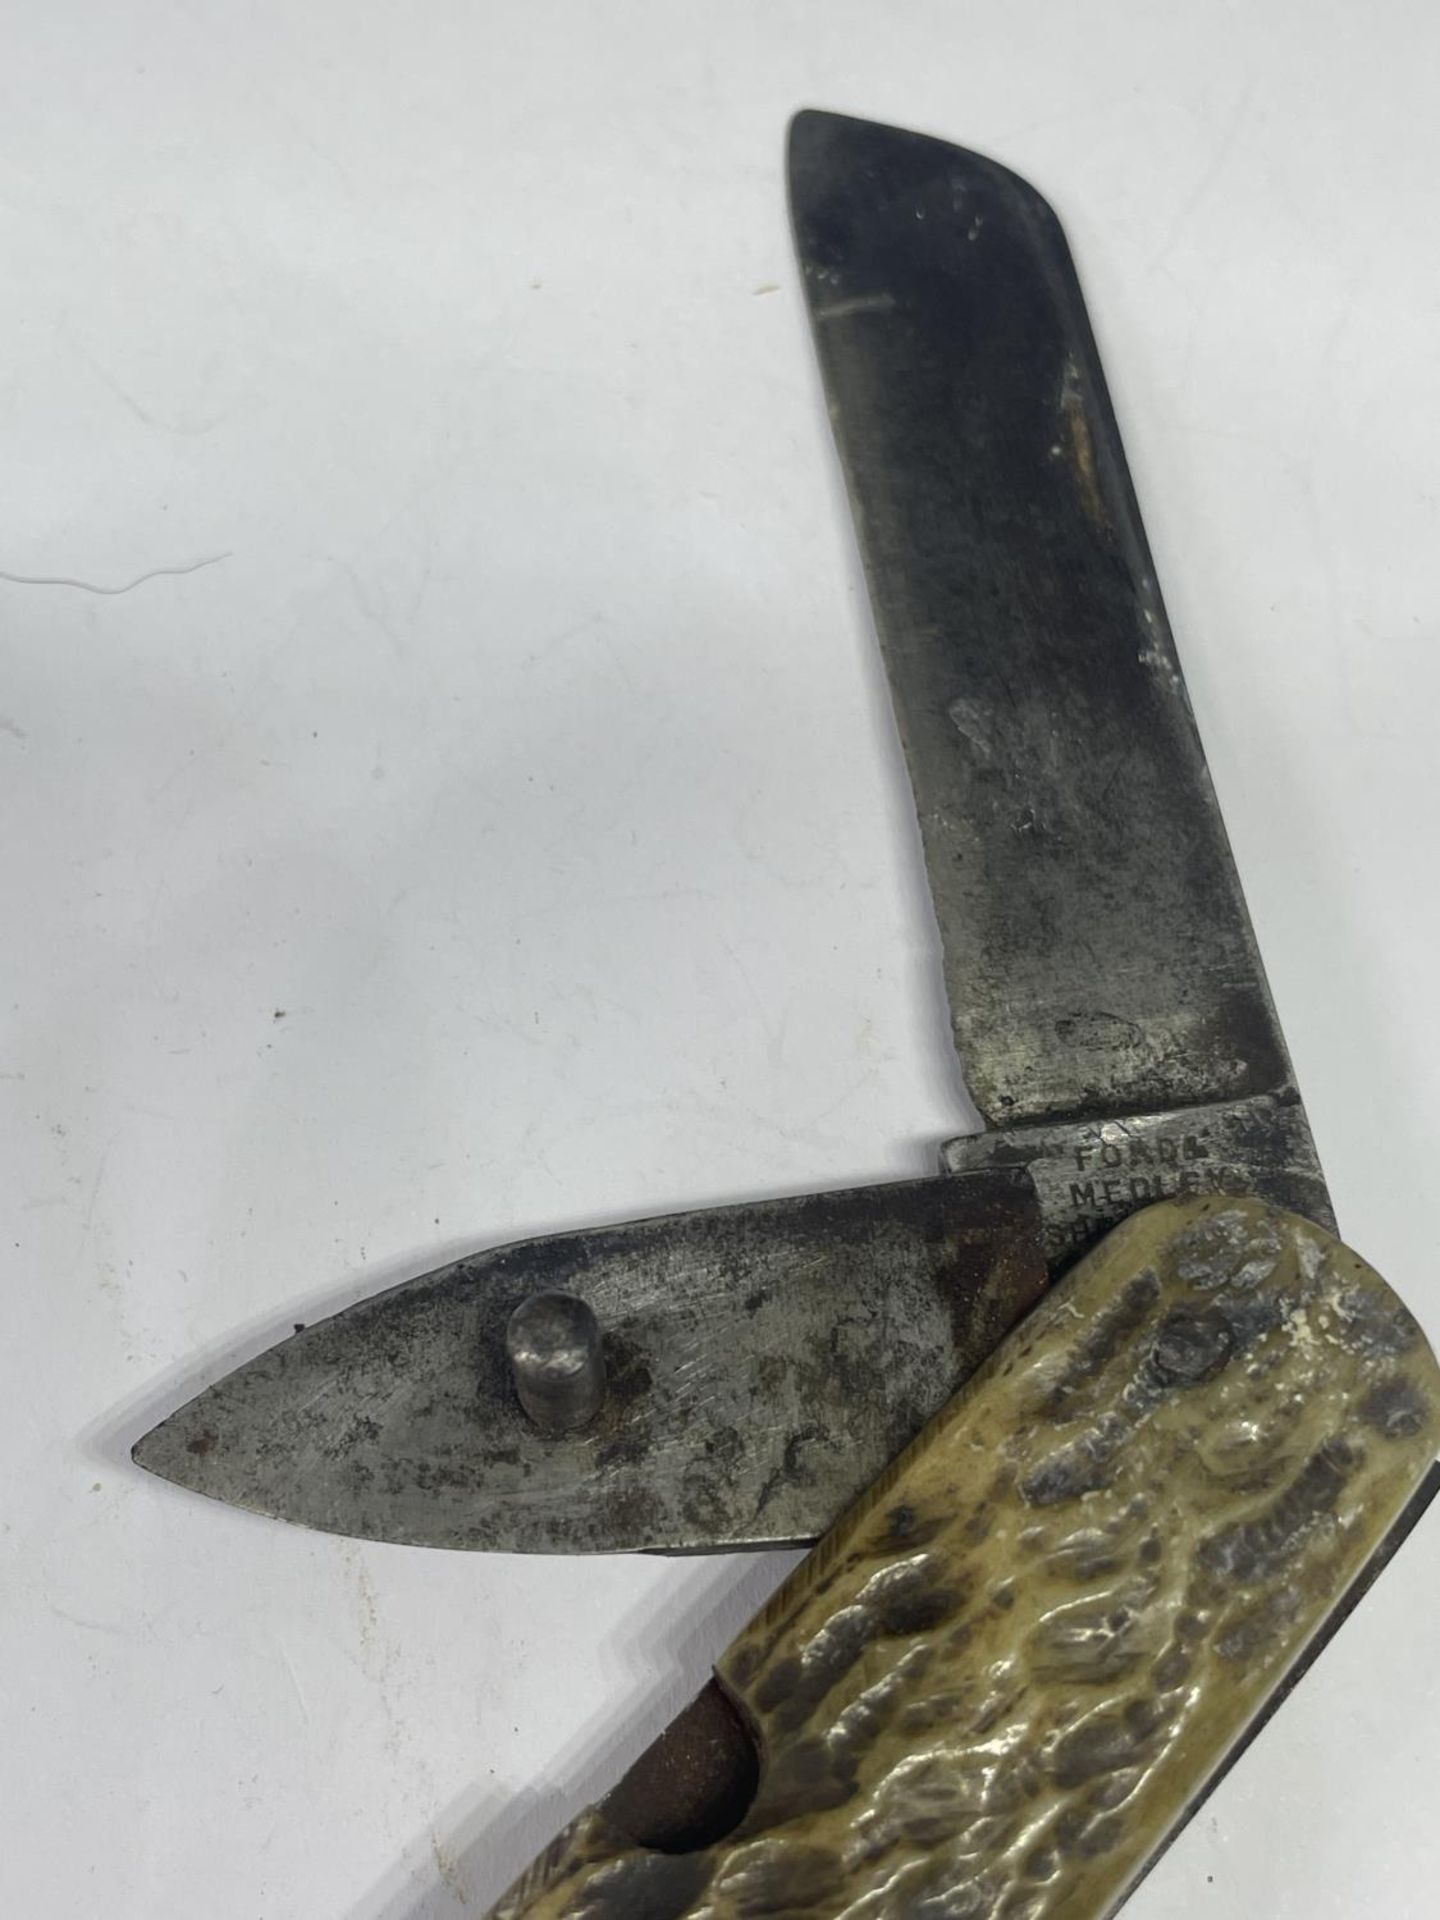 A VINTAGE FORD AND MEDLEY SHEFFIELD POCKET KNIFE - Image 2 of 3